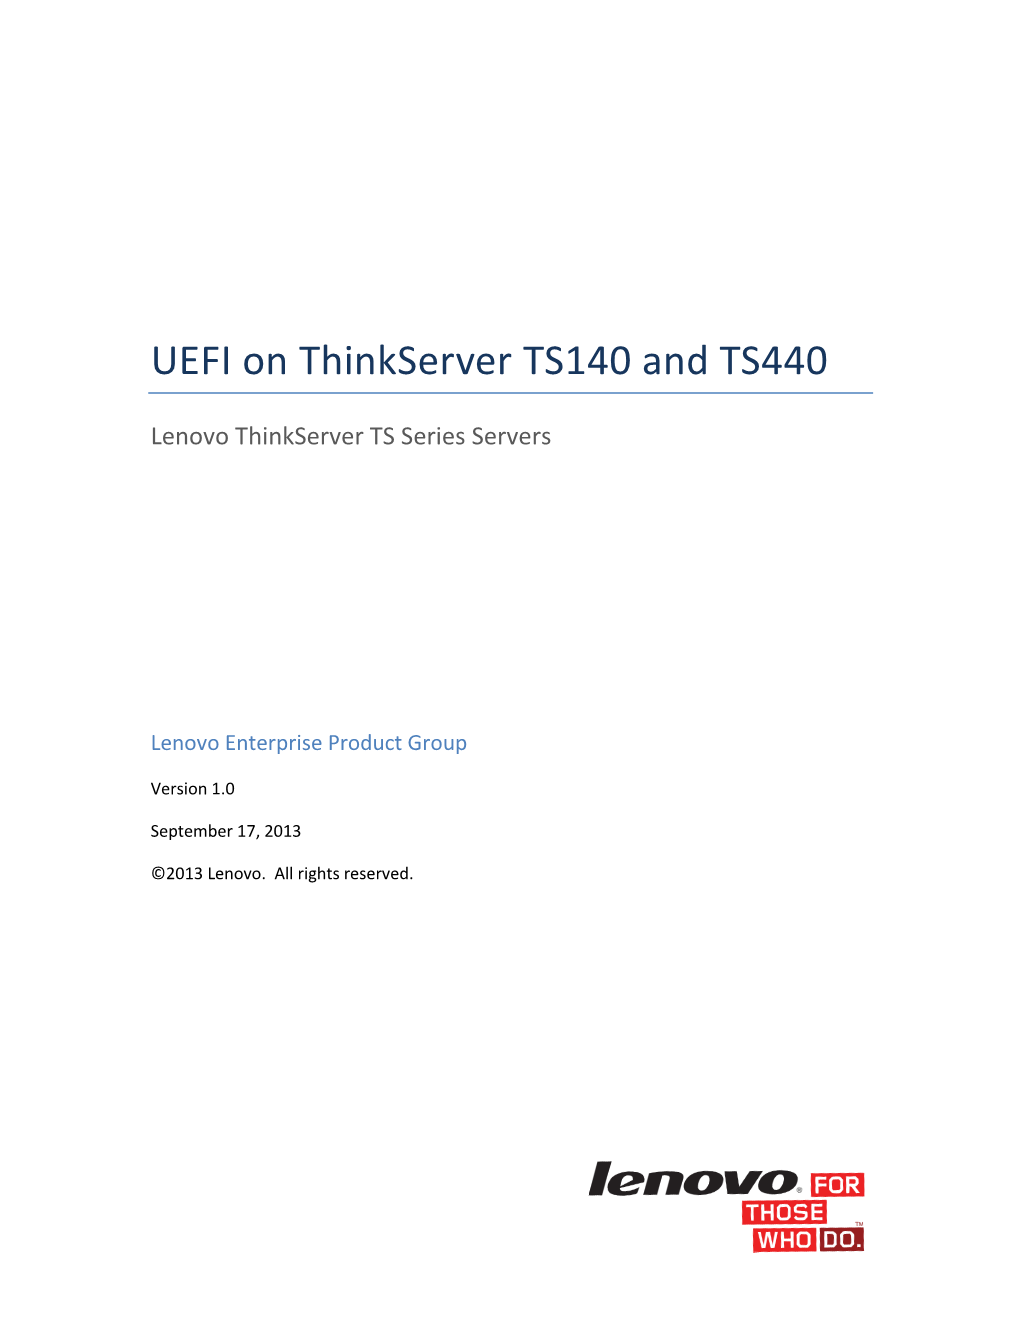 UEFI on Thinkserver TS140 and TS440